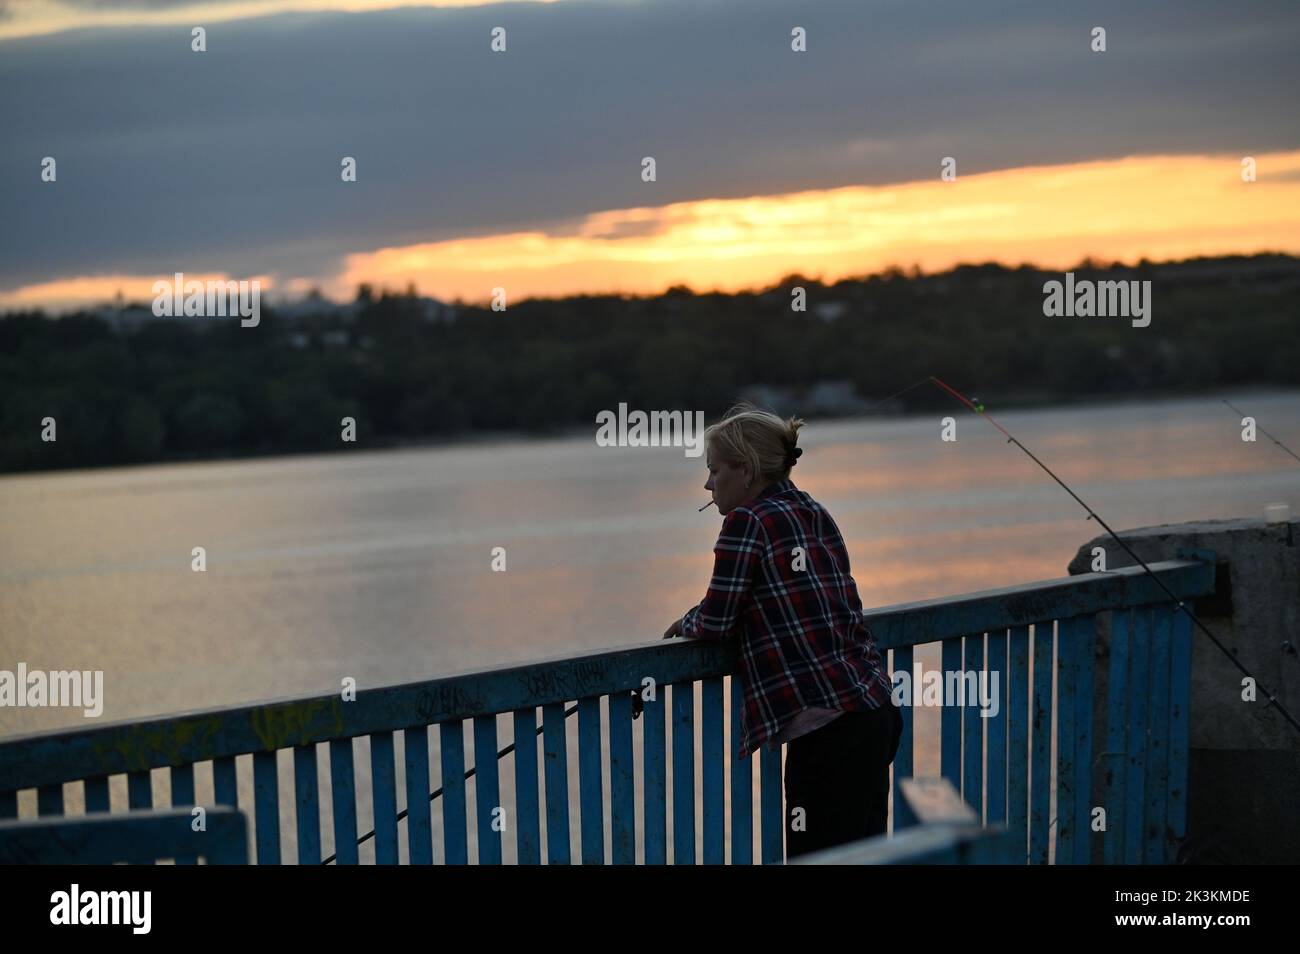 ZAPORIZHZHIA, UKRAINE - SEPTEMBER 1, 2022 - A woman smoking a cigarette fishes in Zaporizhzhia, southeastern Ukraine. Stock Photo